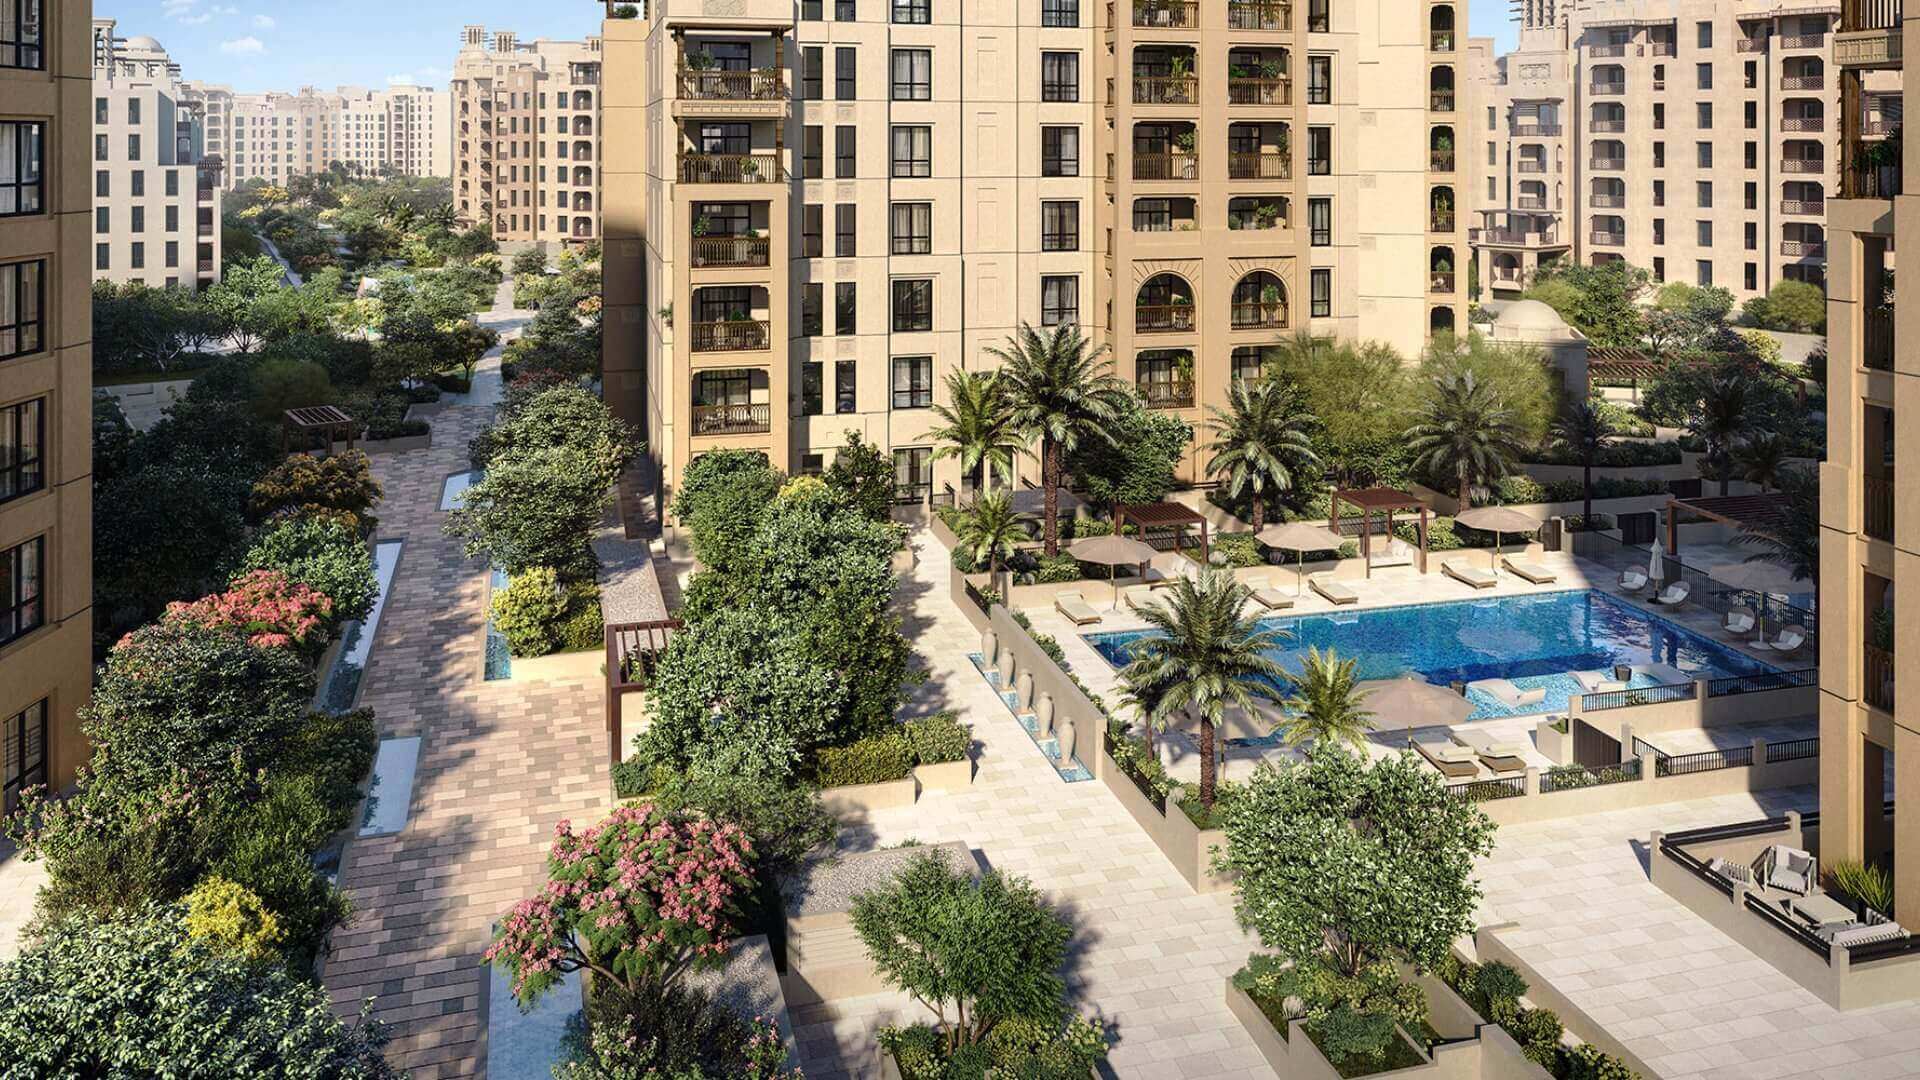 JADEEL by Meraas Holding LLC in Madinat Jumeirah living, Dubai, UAE - 7